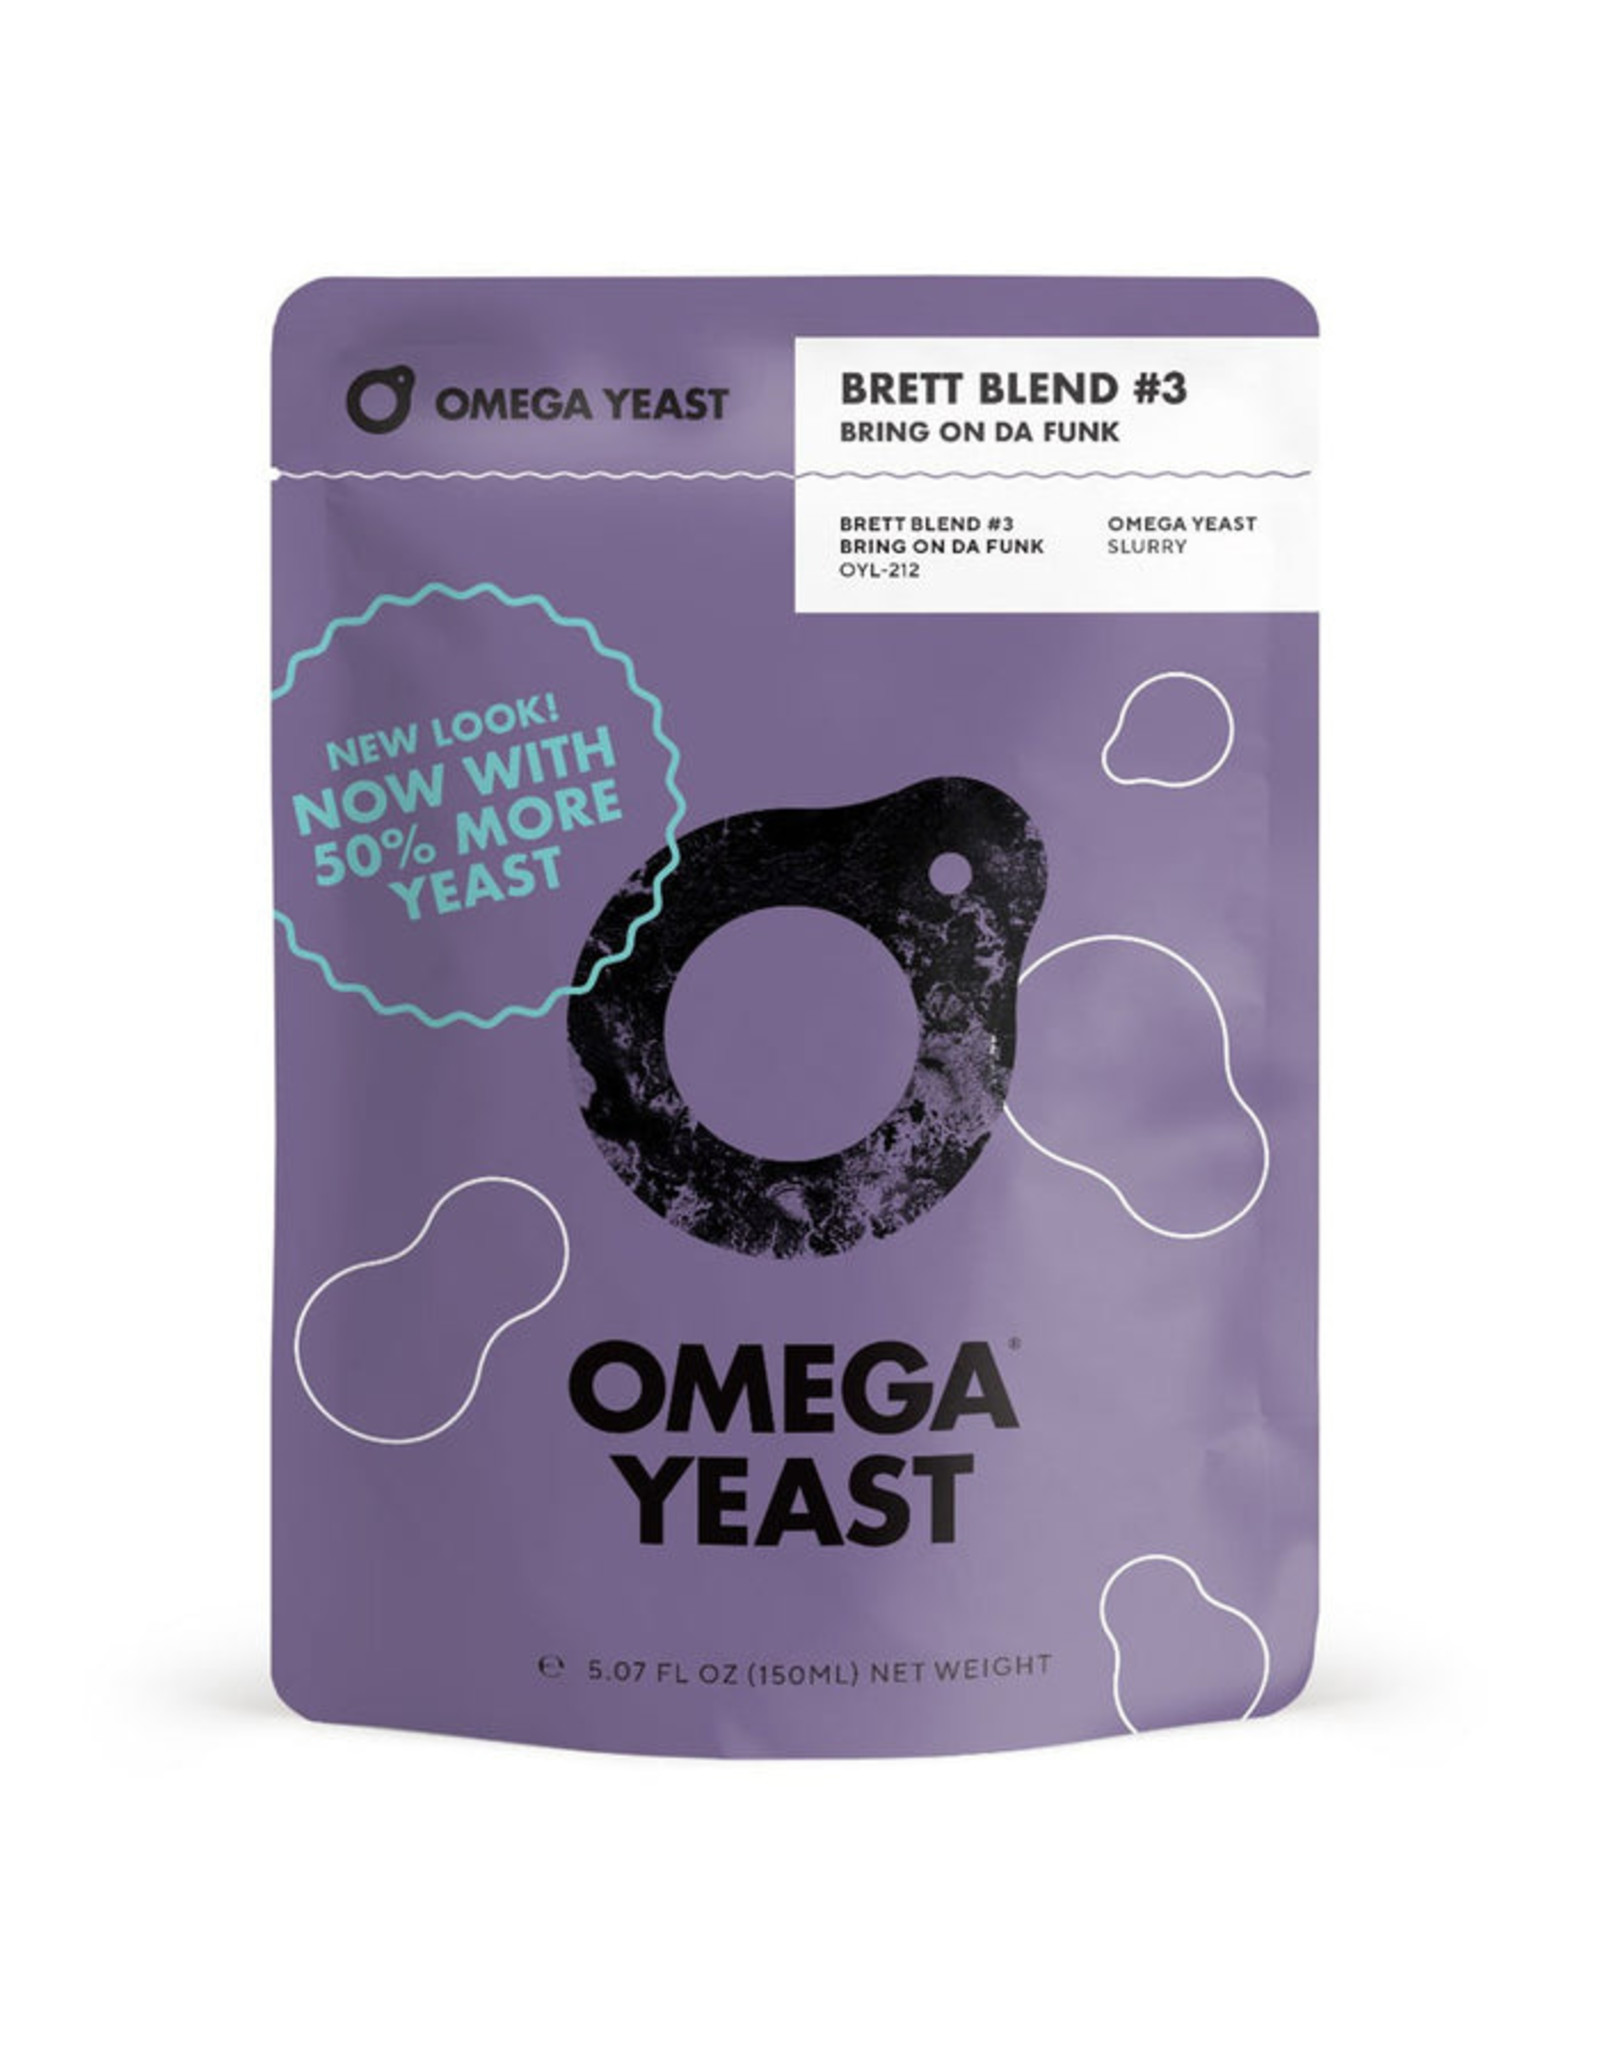 Omega Omega Yeast - Brettanomyces Blend #3: BRING ON DA FUNK